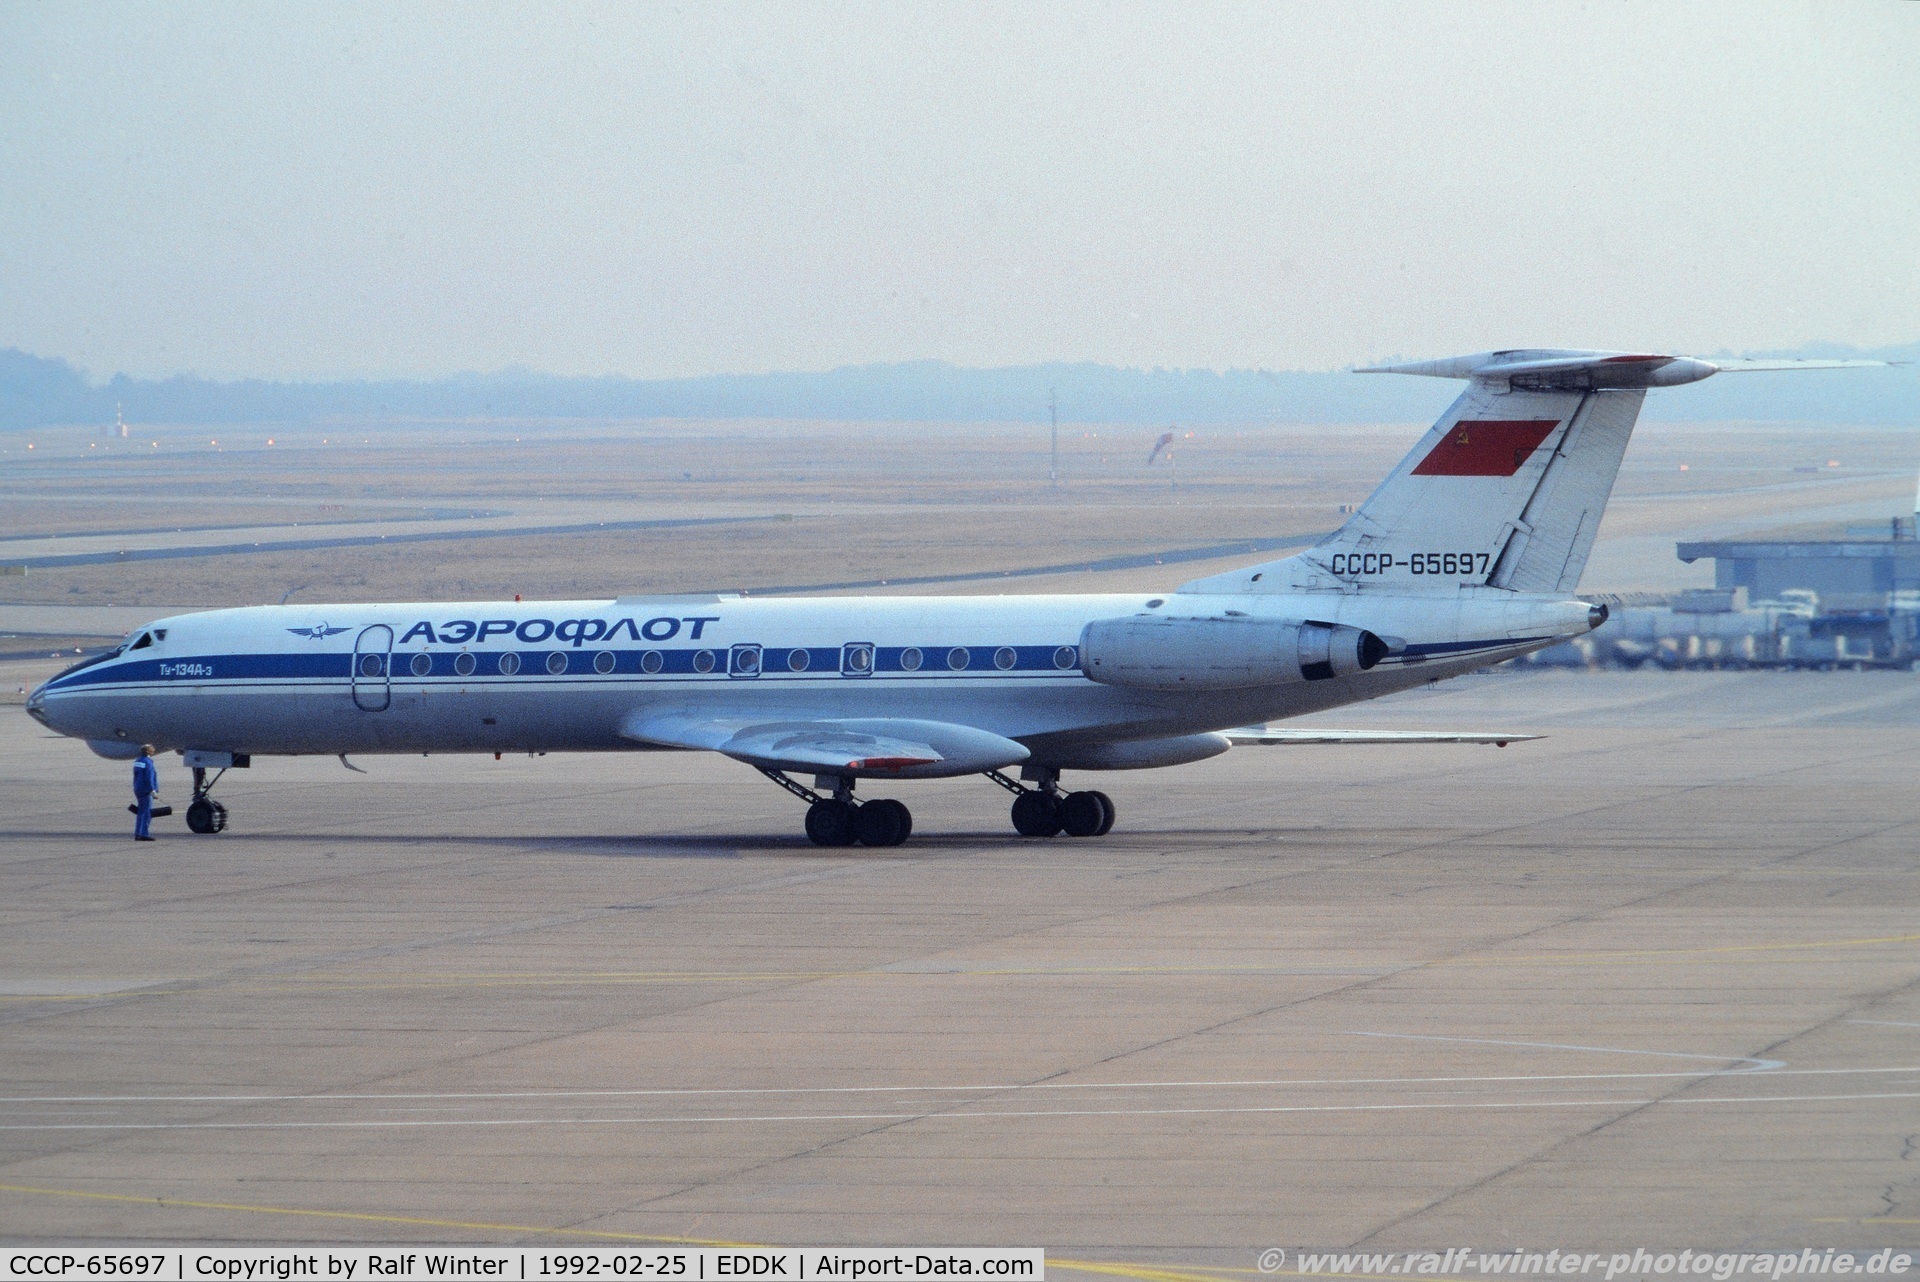 CCCP-65697, 1980 Tupolev Tu-134A-3 C/N 63307, Tupolev Tu-134A - Aeroflot - 63307 - CCCP-65697 - 25.02.1992 - CGN